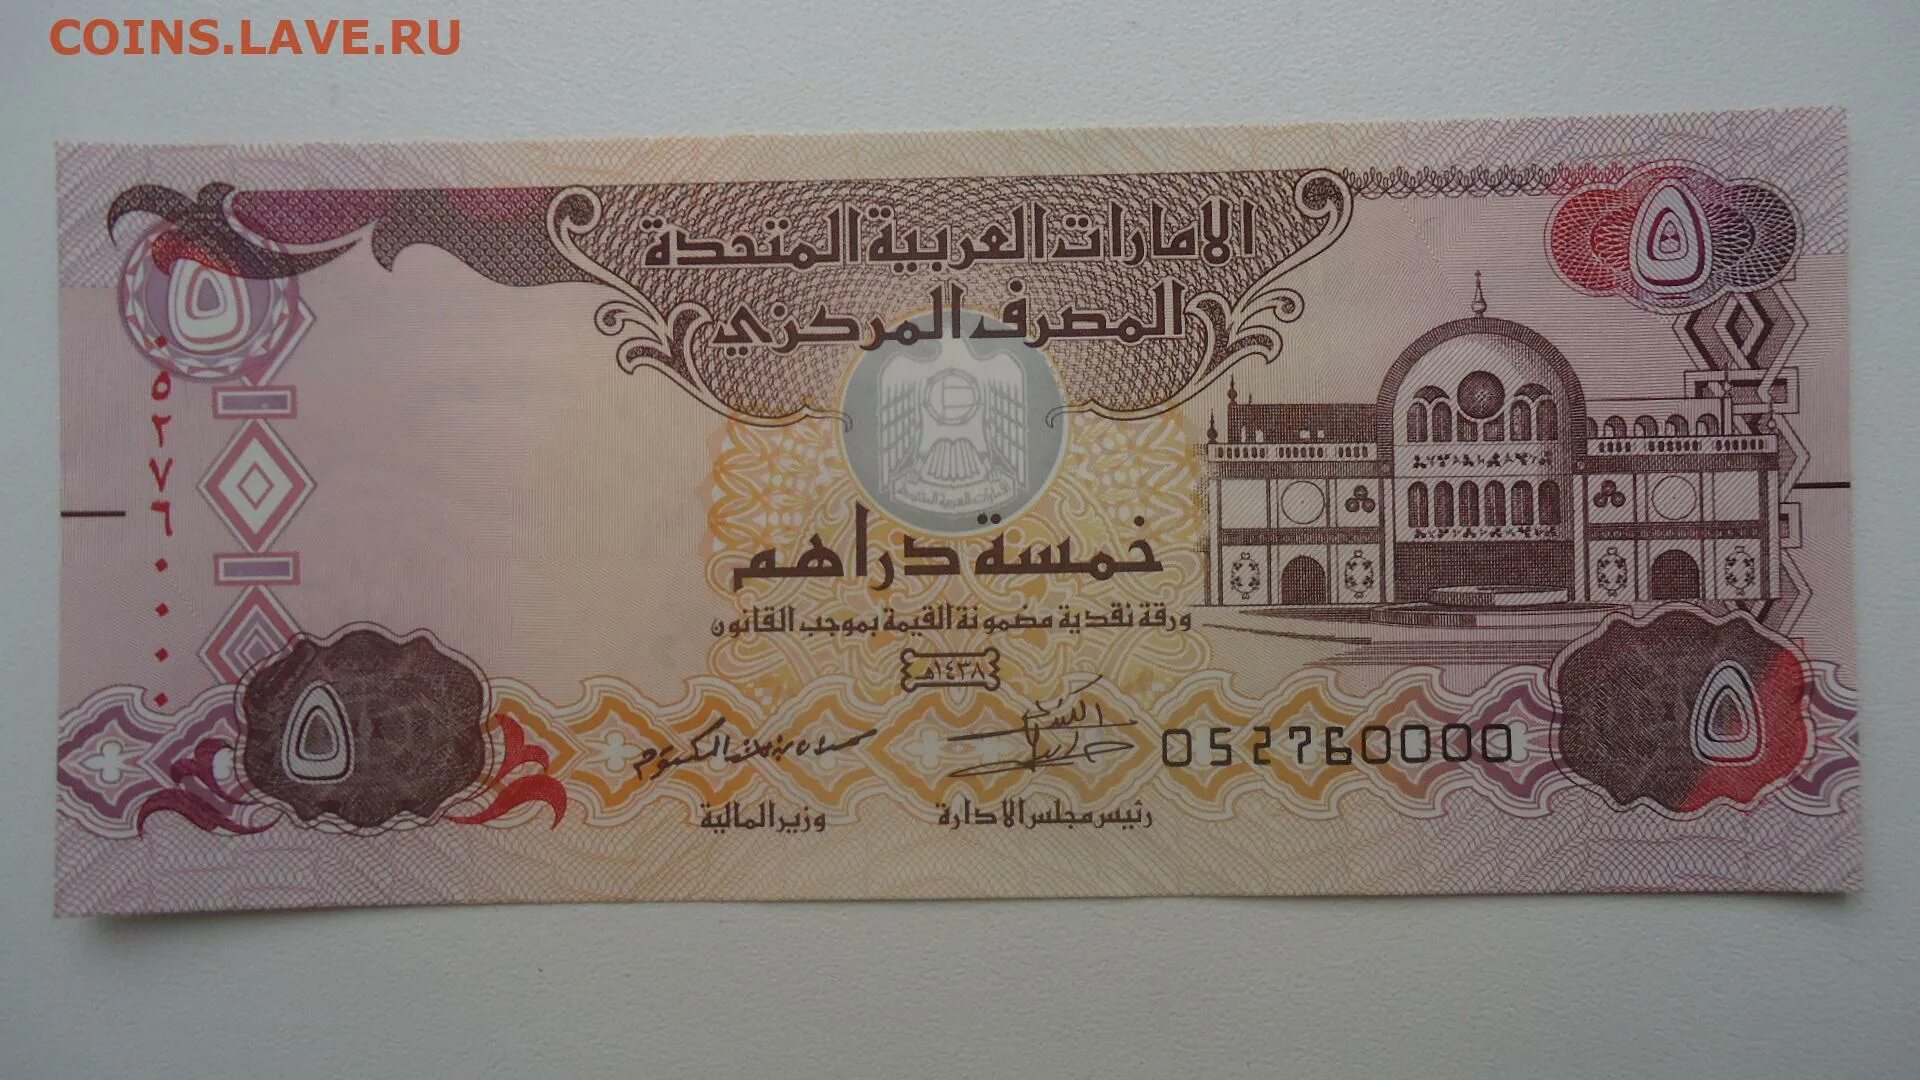 5 Дирхам ОАЭ. Банкнота ОАЭ 10 дирхам. 25 Дирхам Объединенные арабские эмираты. Дирхам ОАЭ К доллару США. 1600 дирхам